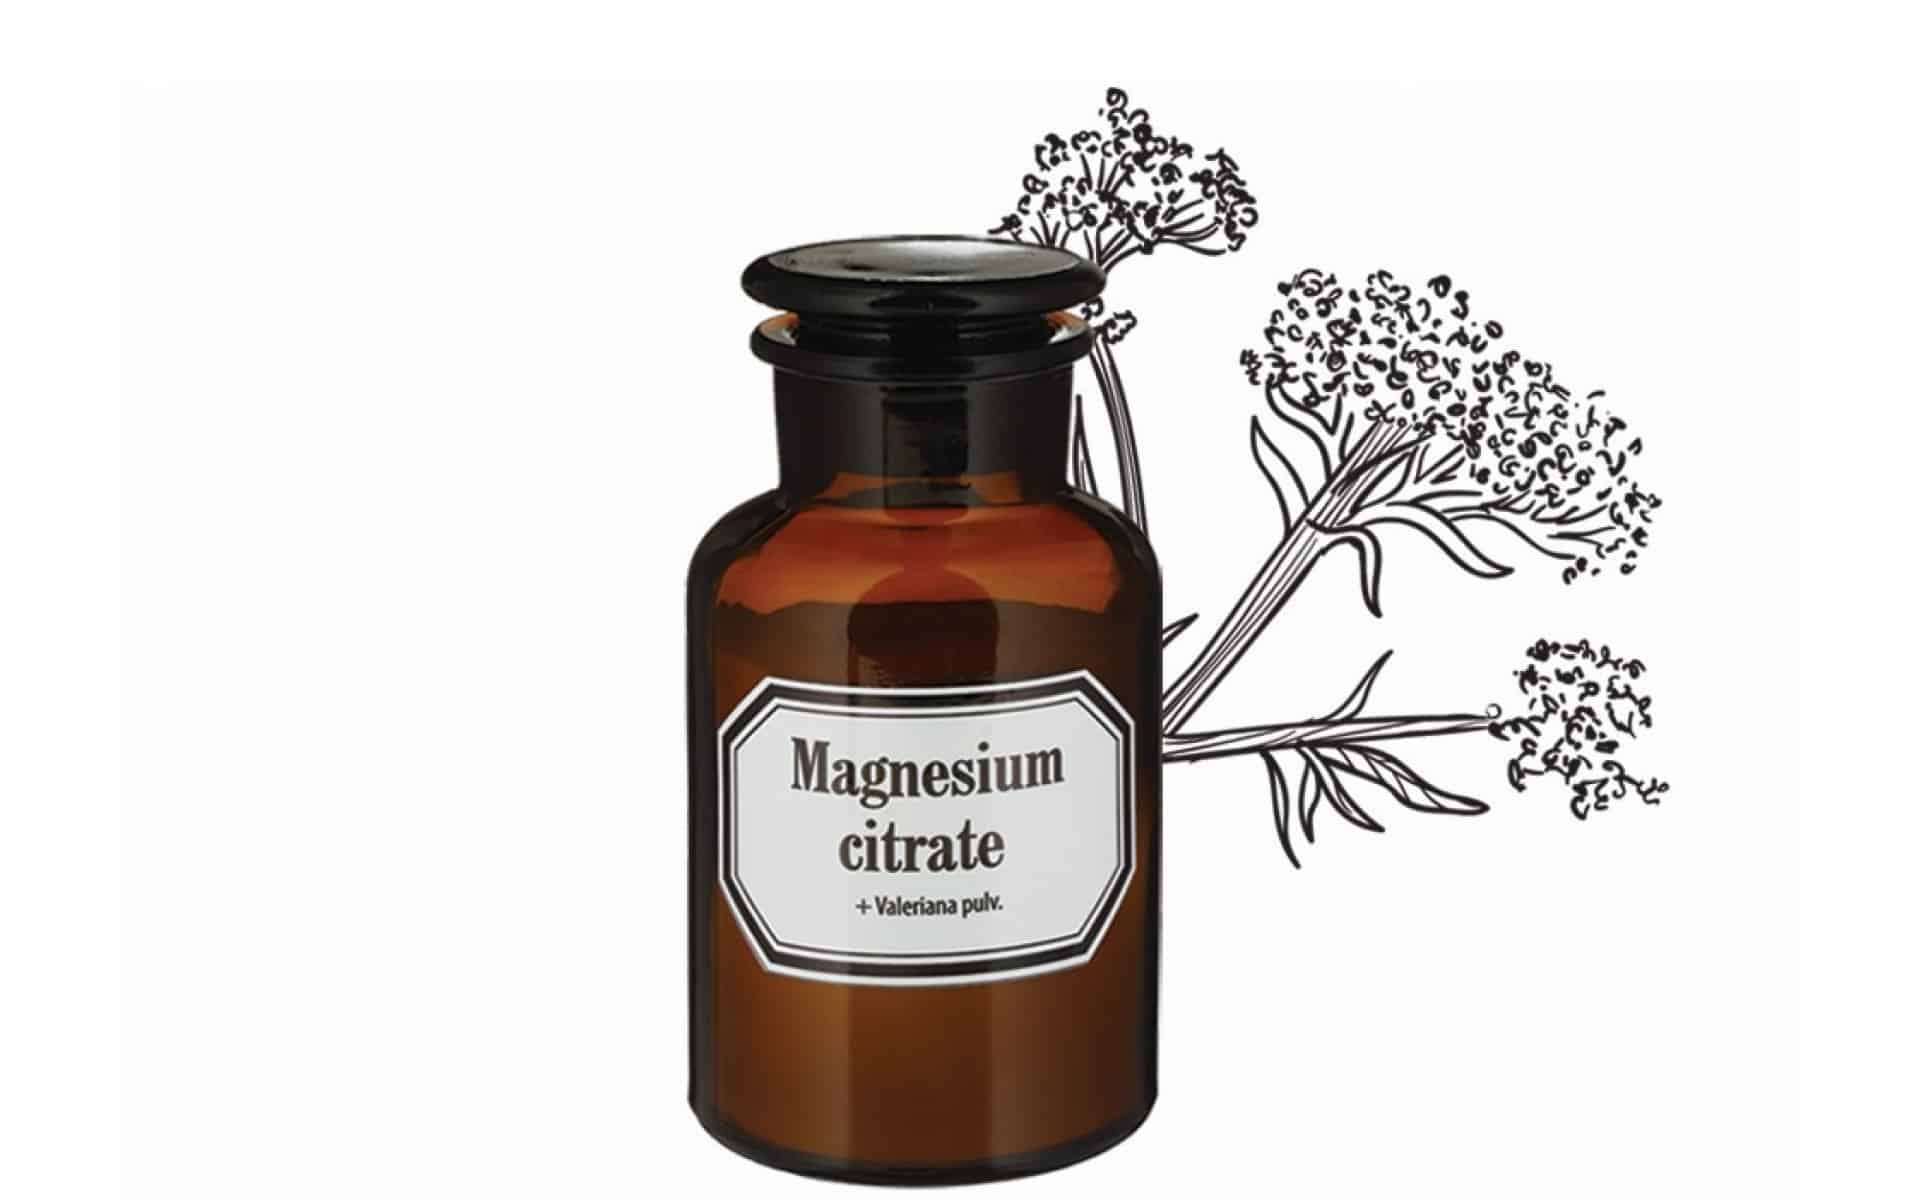 OLD-PHARMA-Magnesium-citrate-Valerian-pulv.-7290010159505